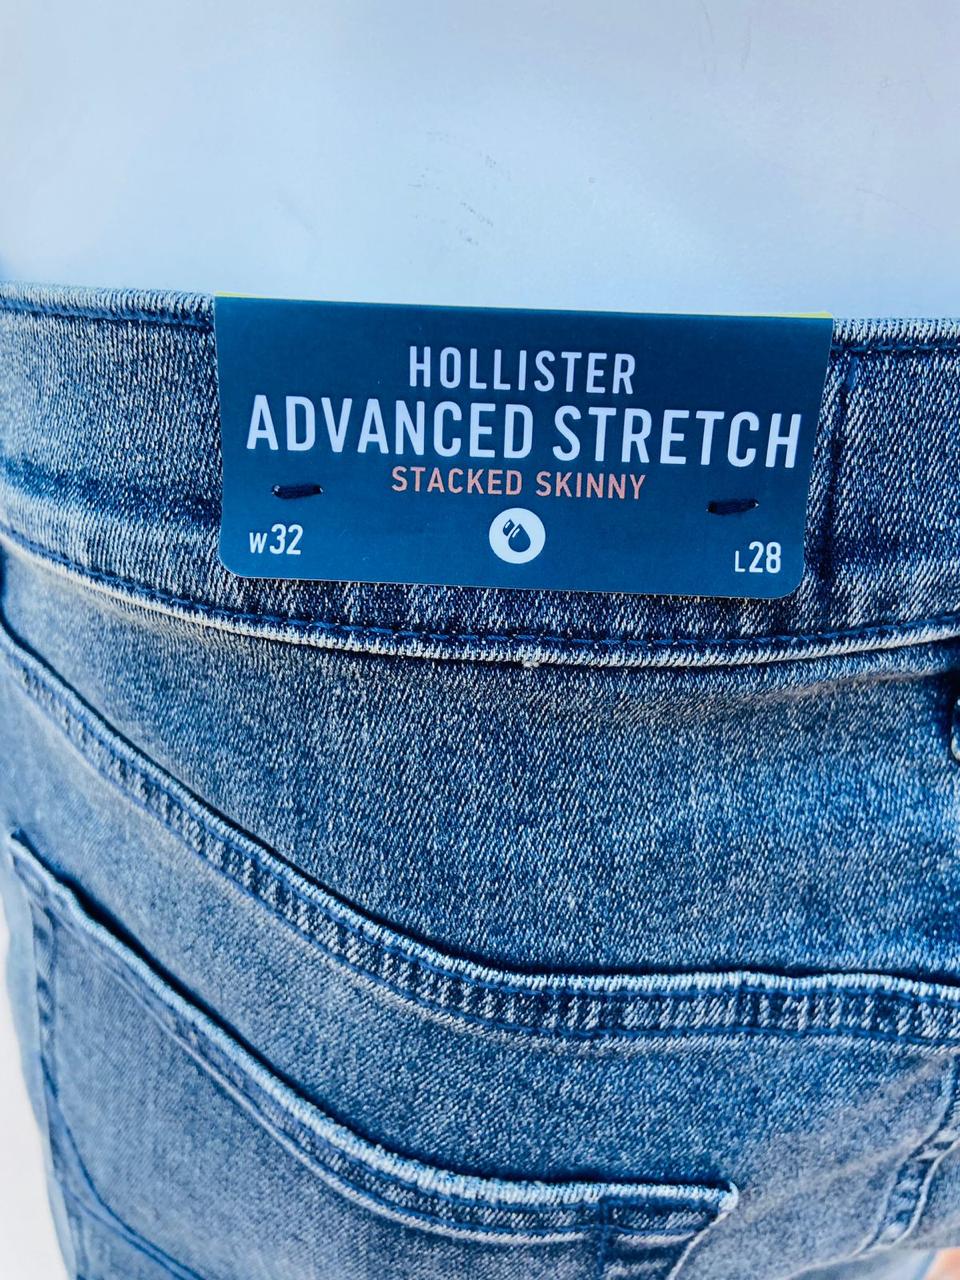 Pantalon Hollister original azul poco degradado con rasgado tapados  ADVANCED STRECH STACKED SKINNY